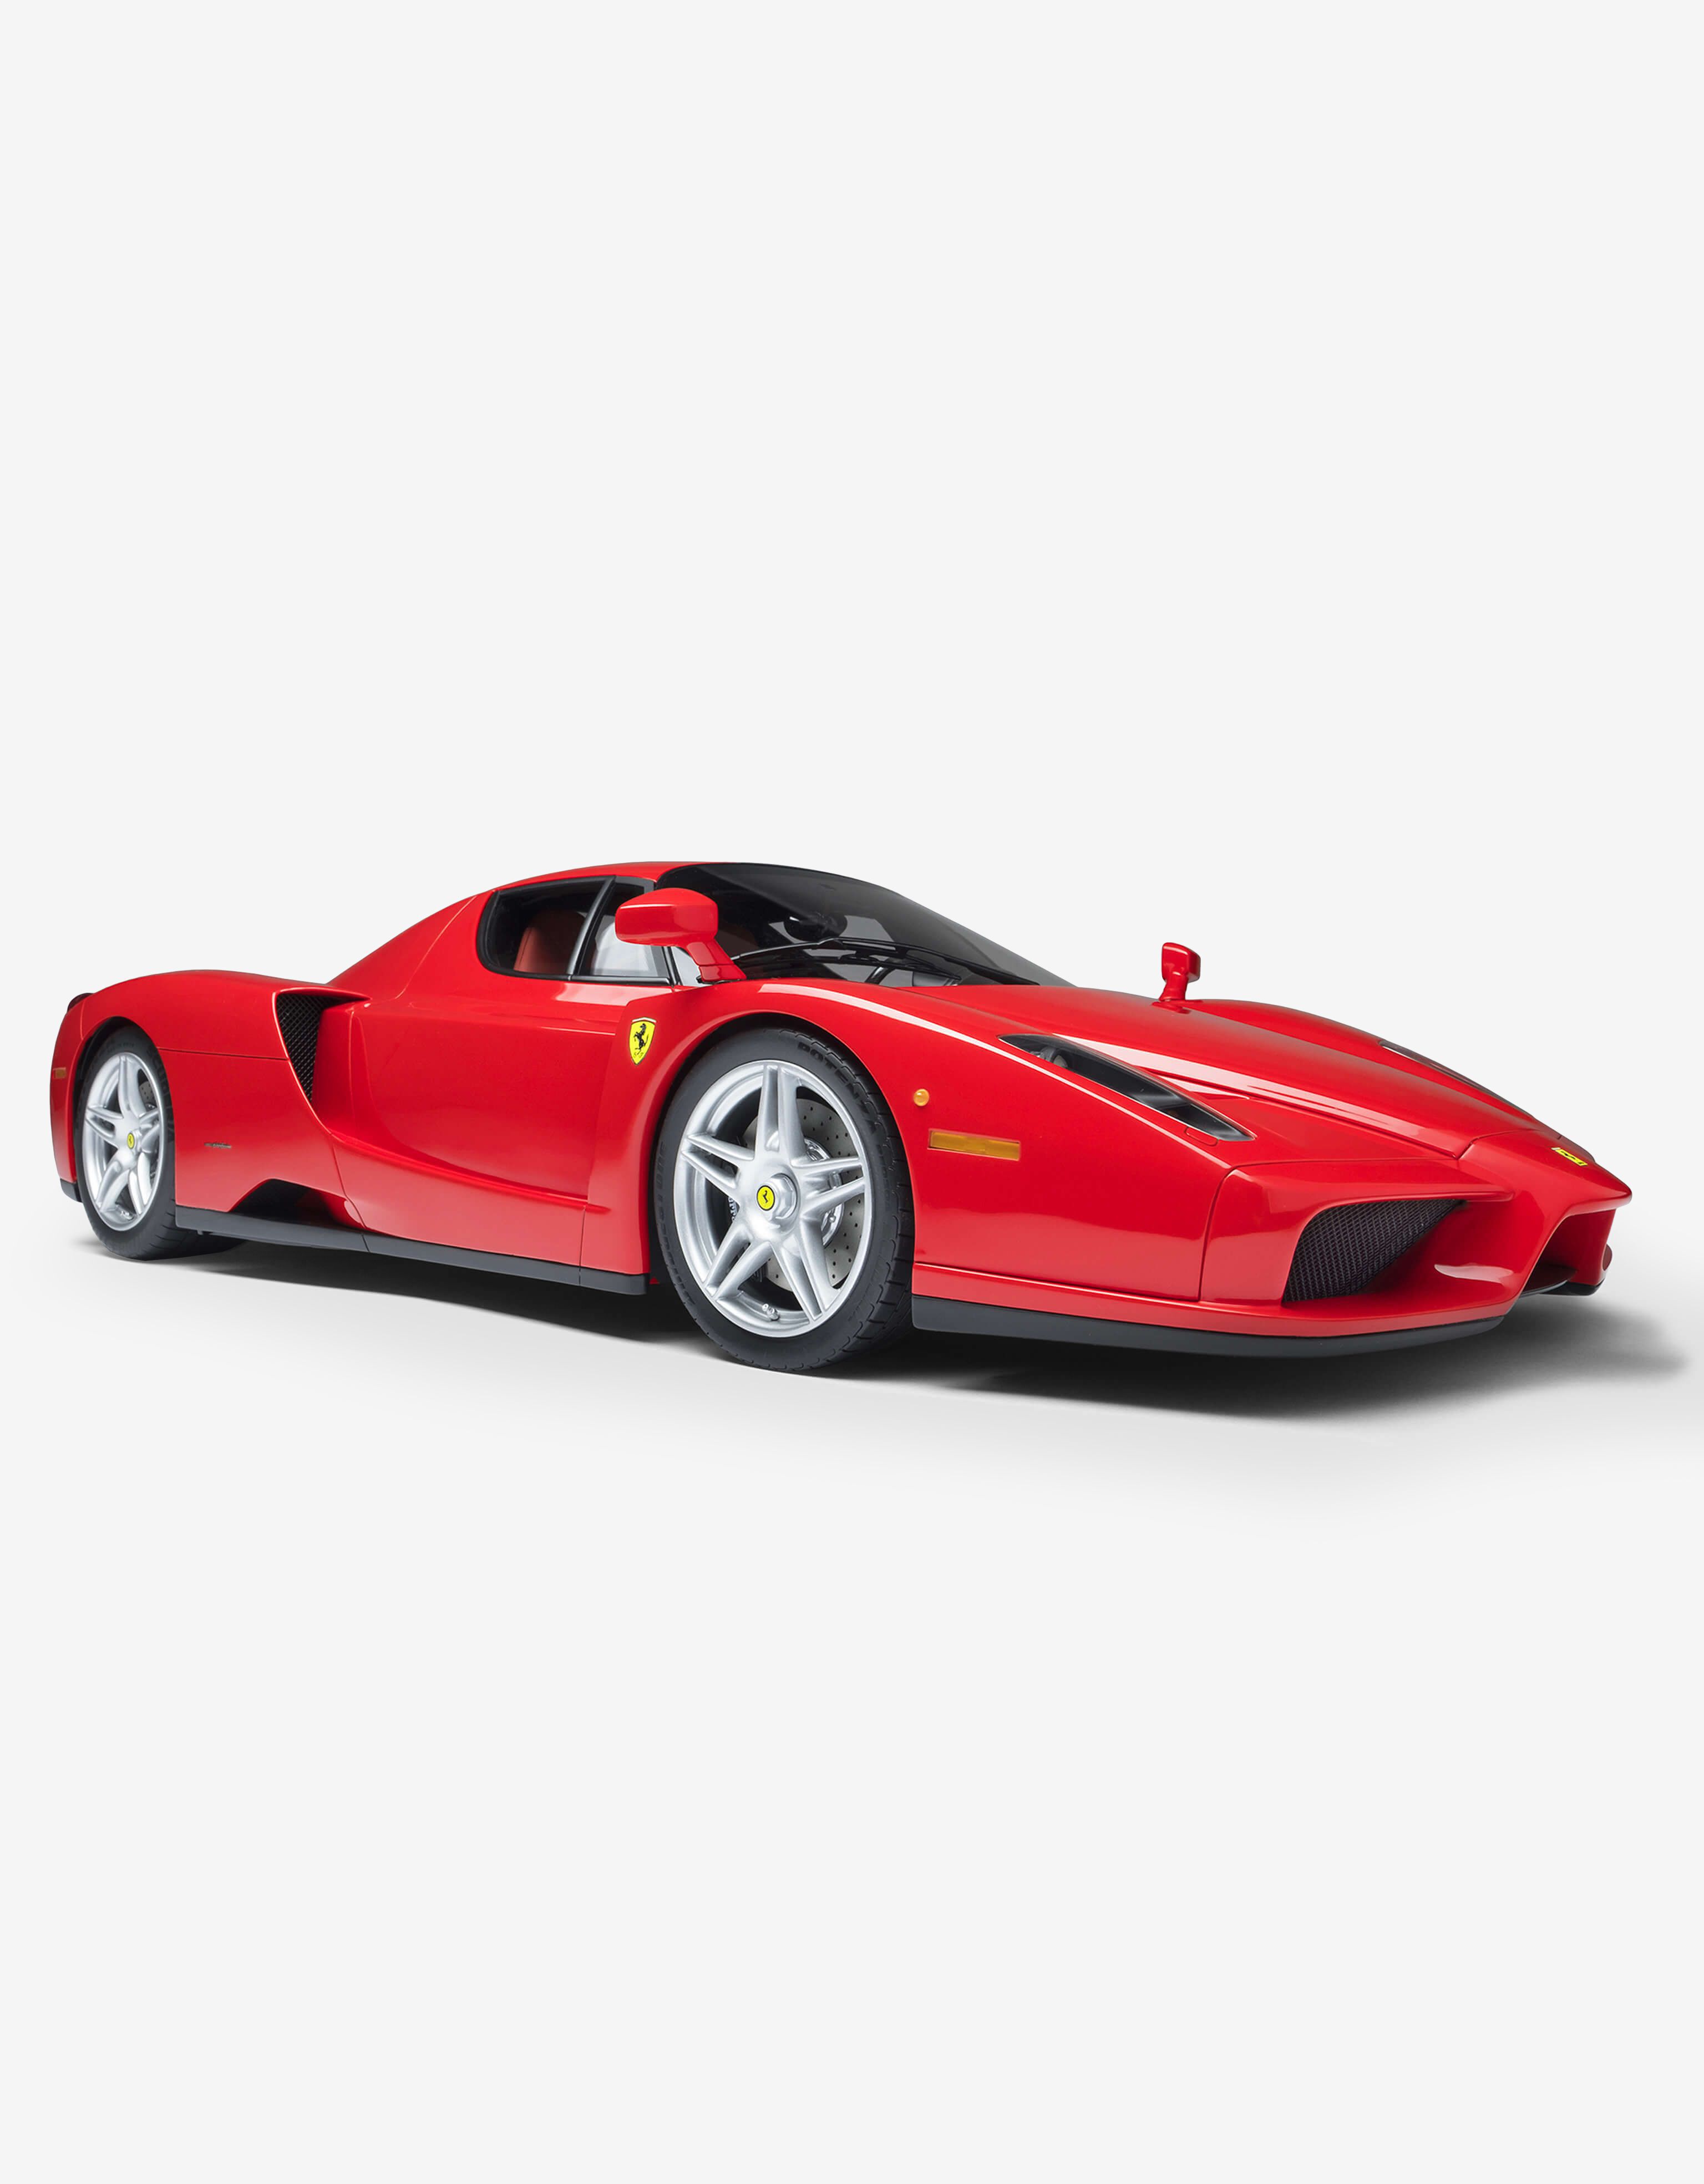 Ferrari Modellauto Ferrari Enzo im Maßstab 1:8 MEHRFARBIG L4067f